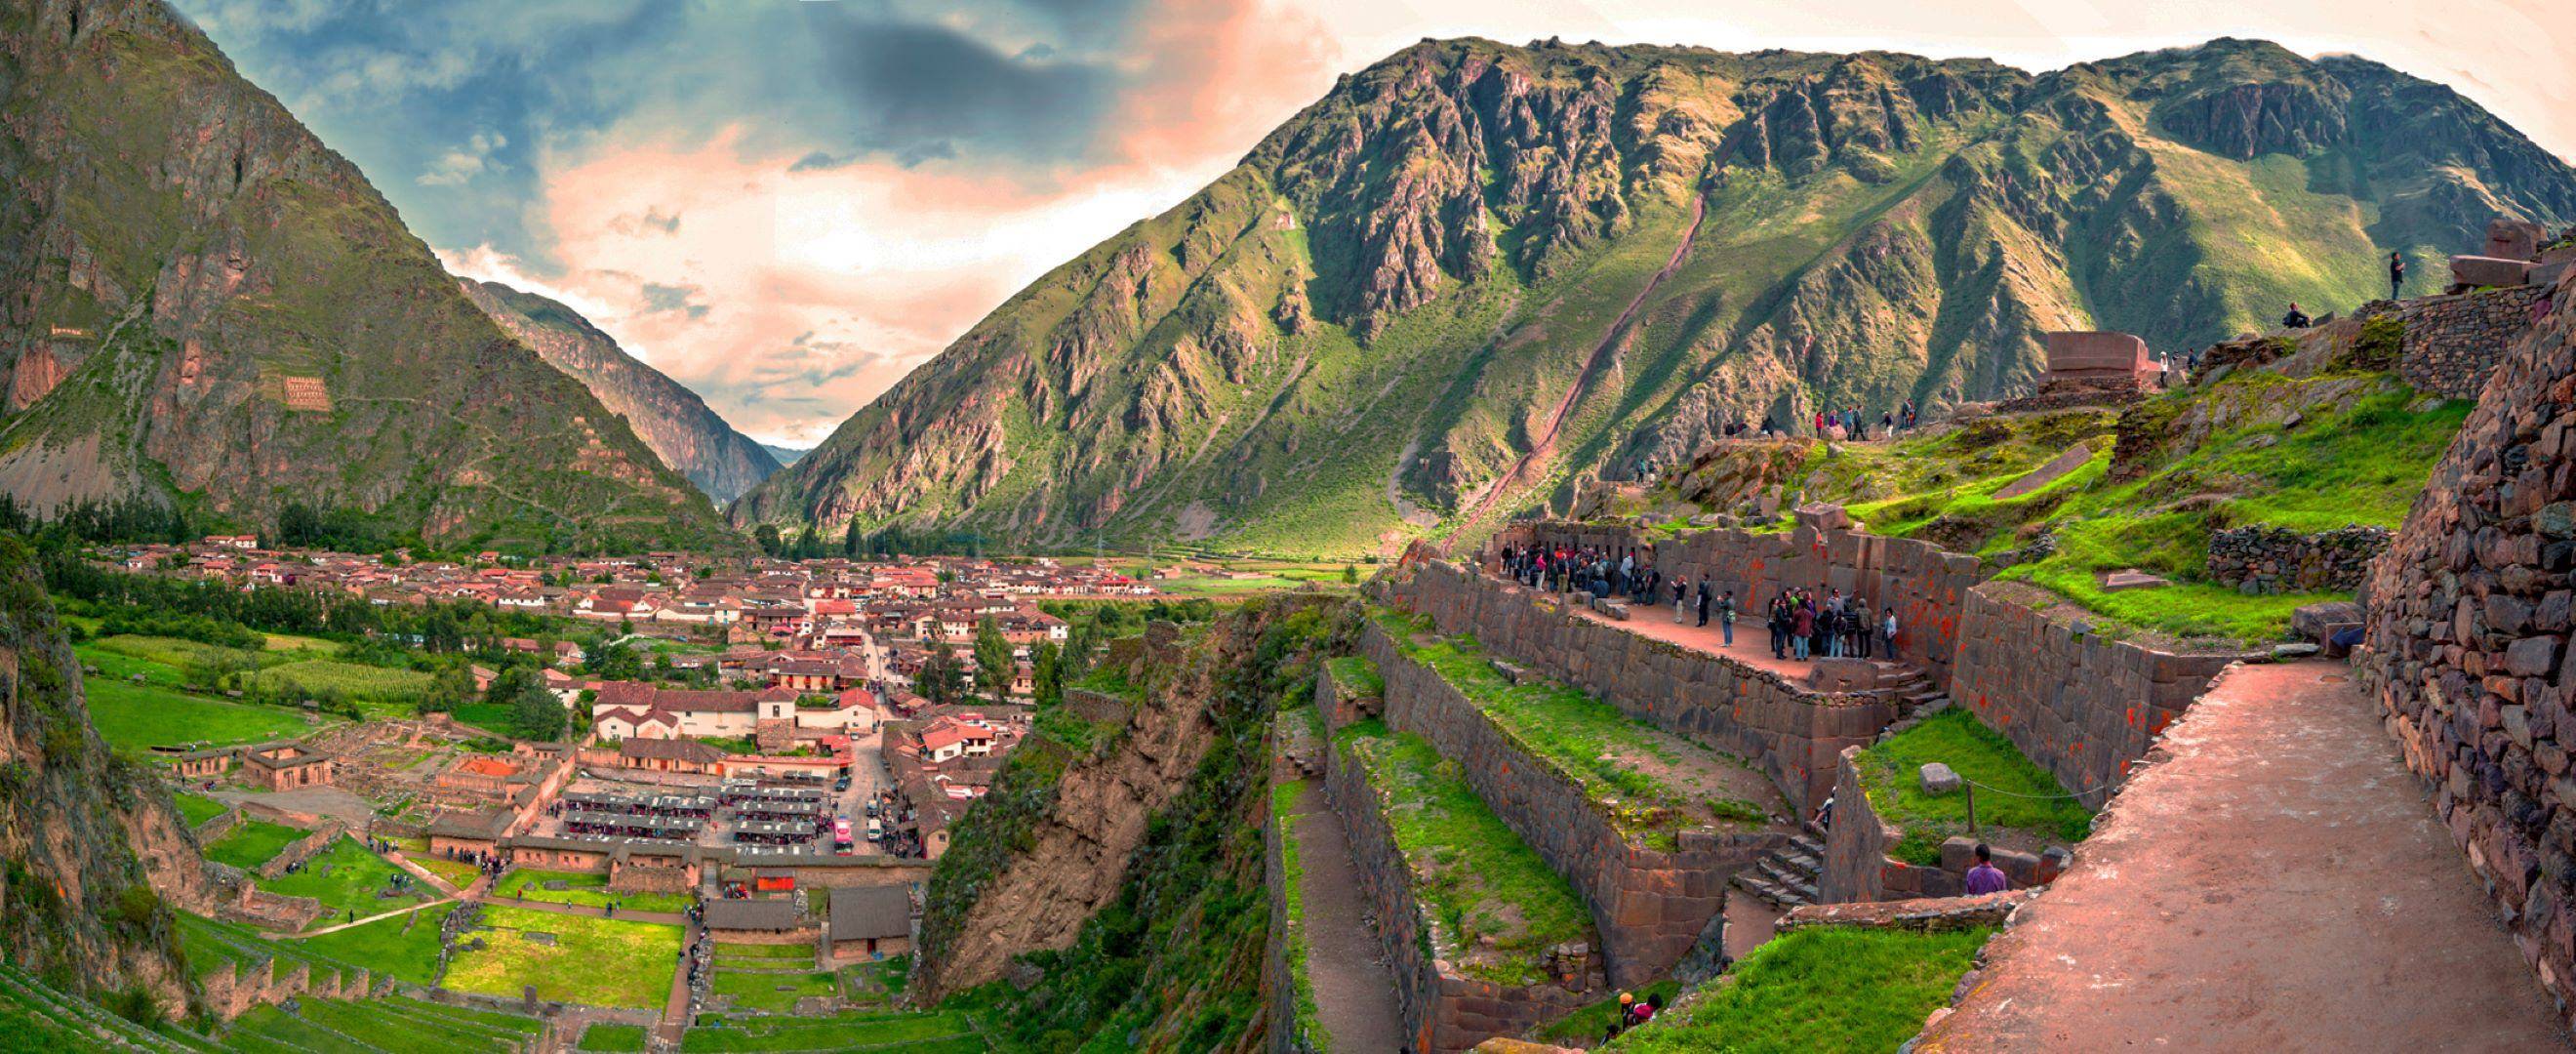 Valle sacra degli Inca